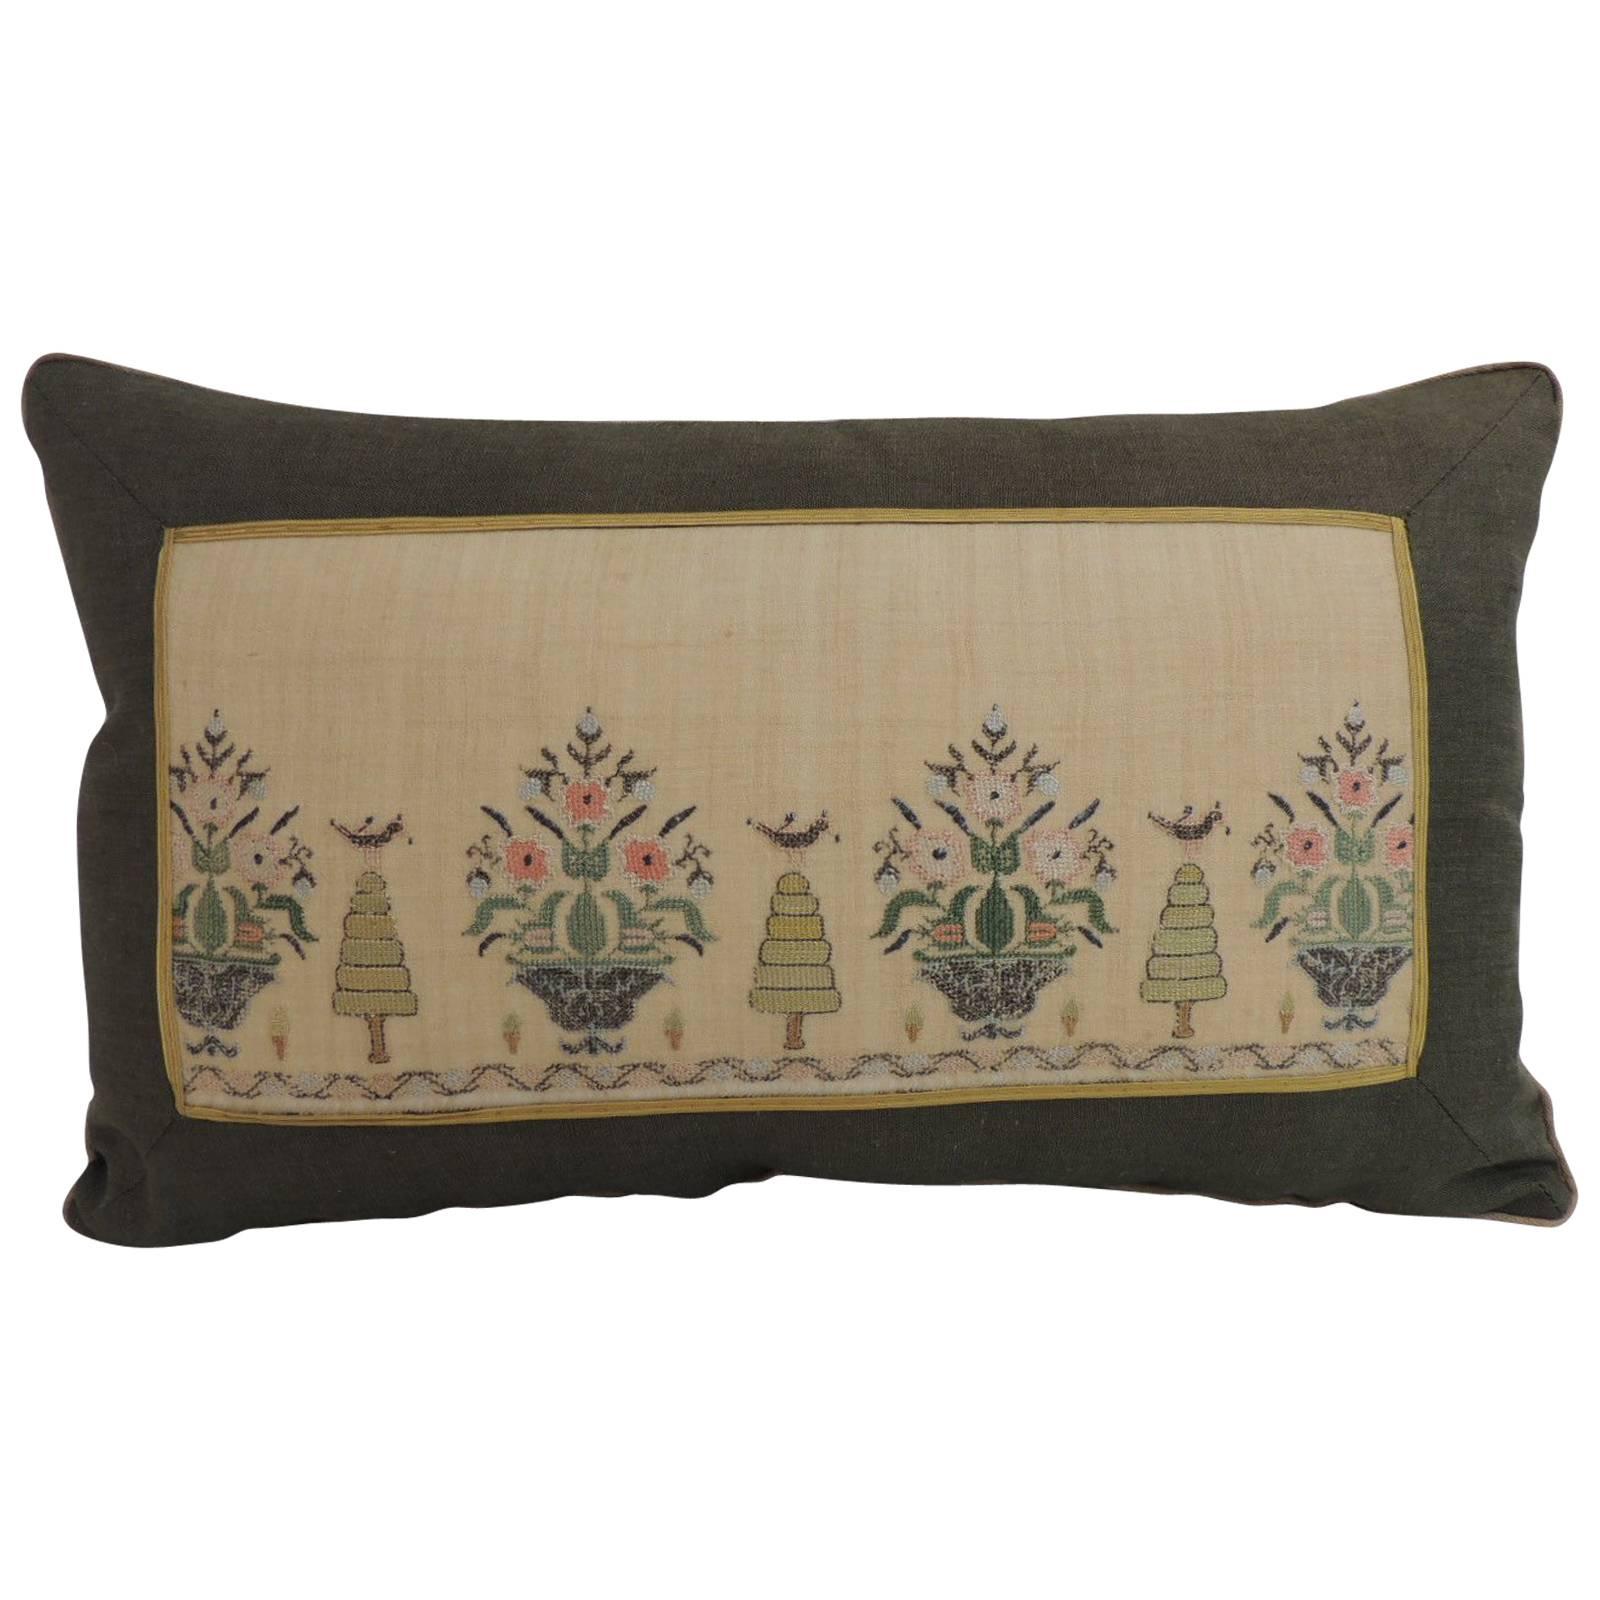 19th Century Turkish Embroidery Lumbar Decorative Pillow